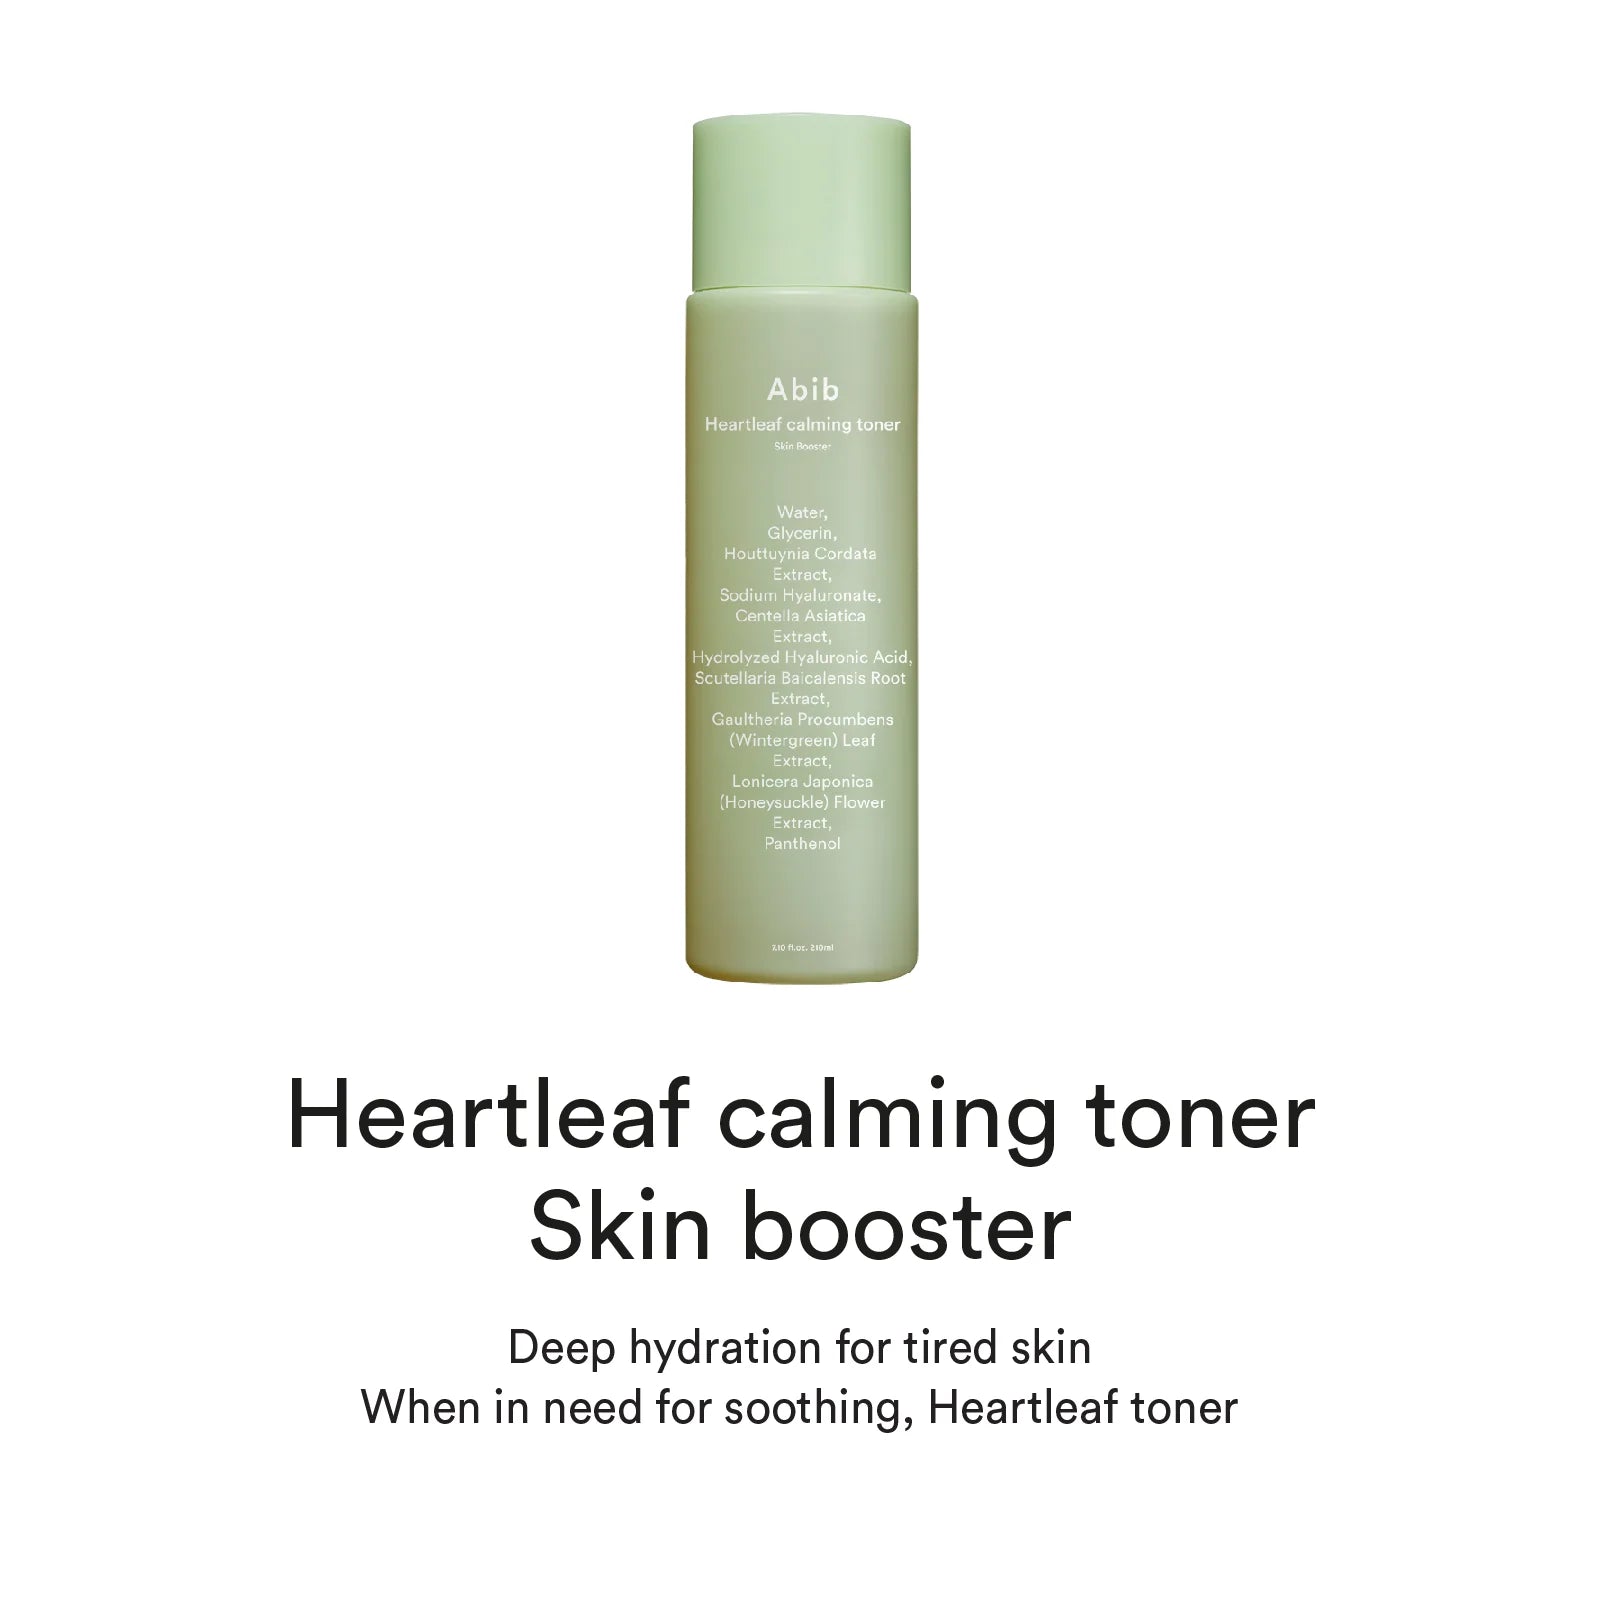 Abib Heartleaf Calming Toner Skin Booster